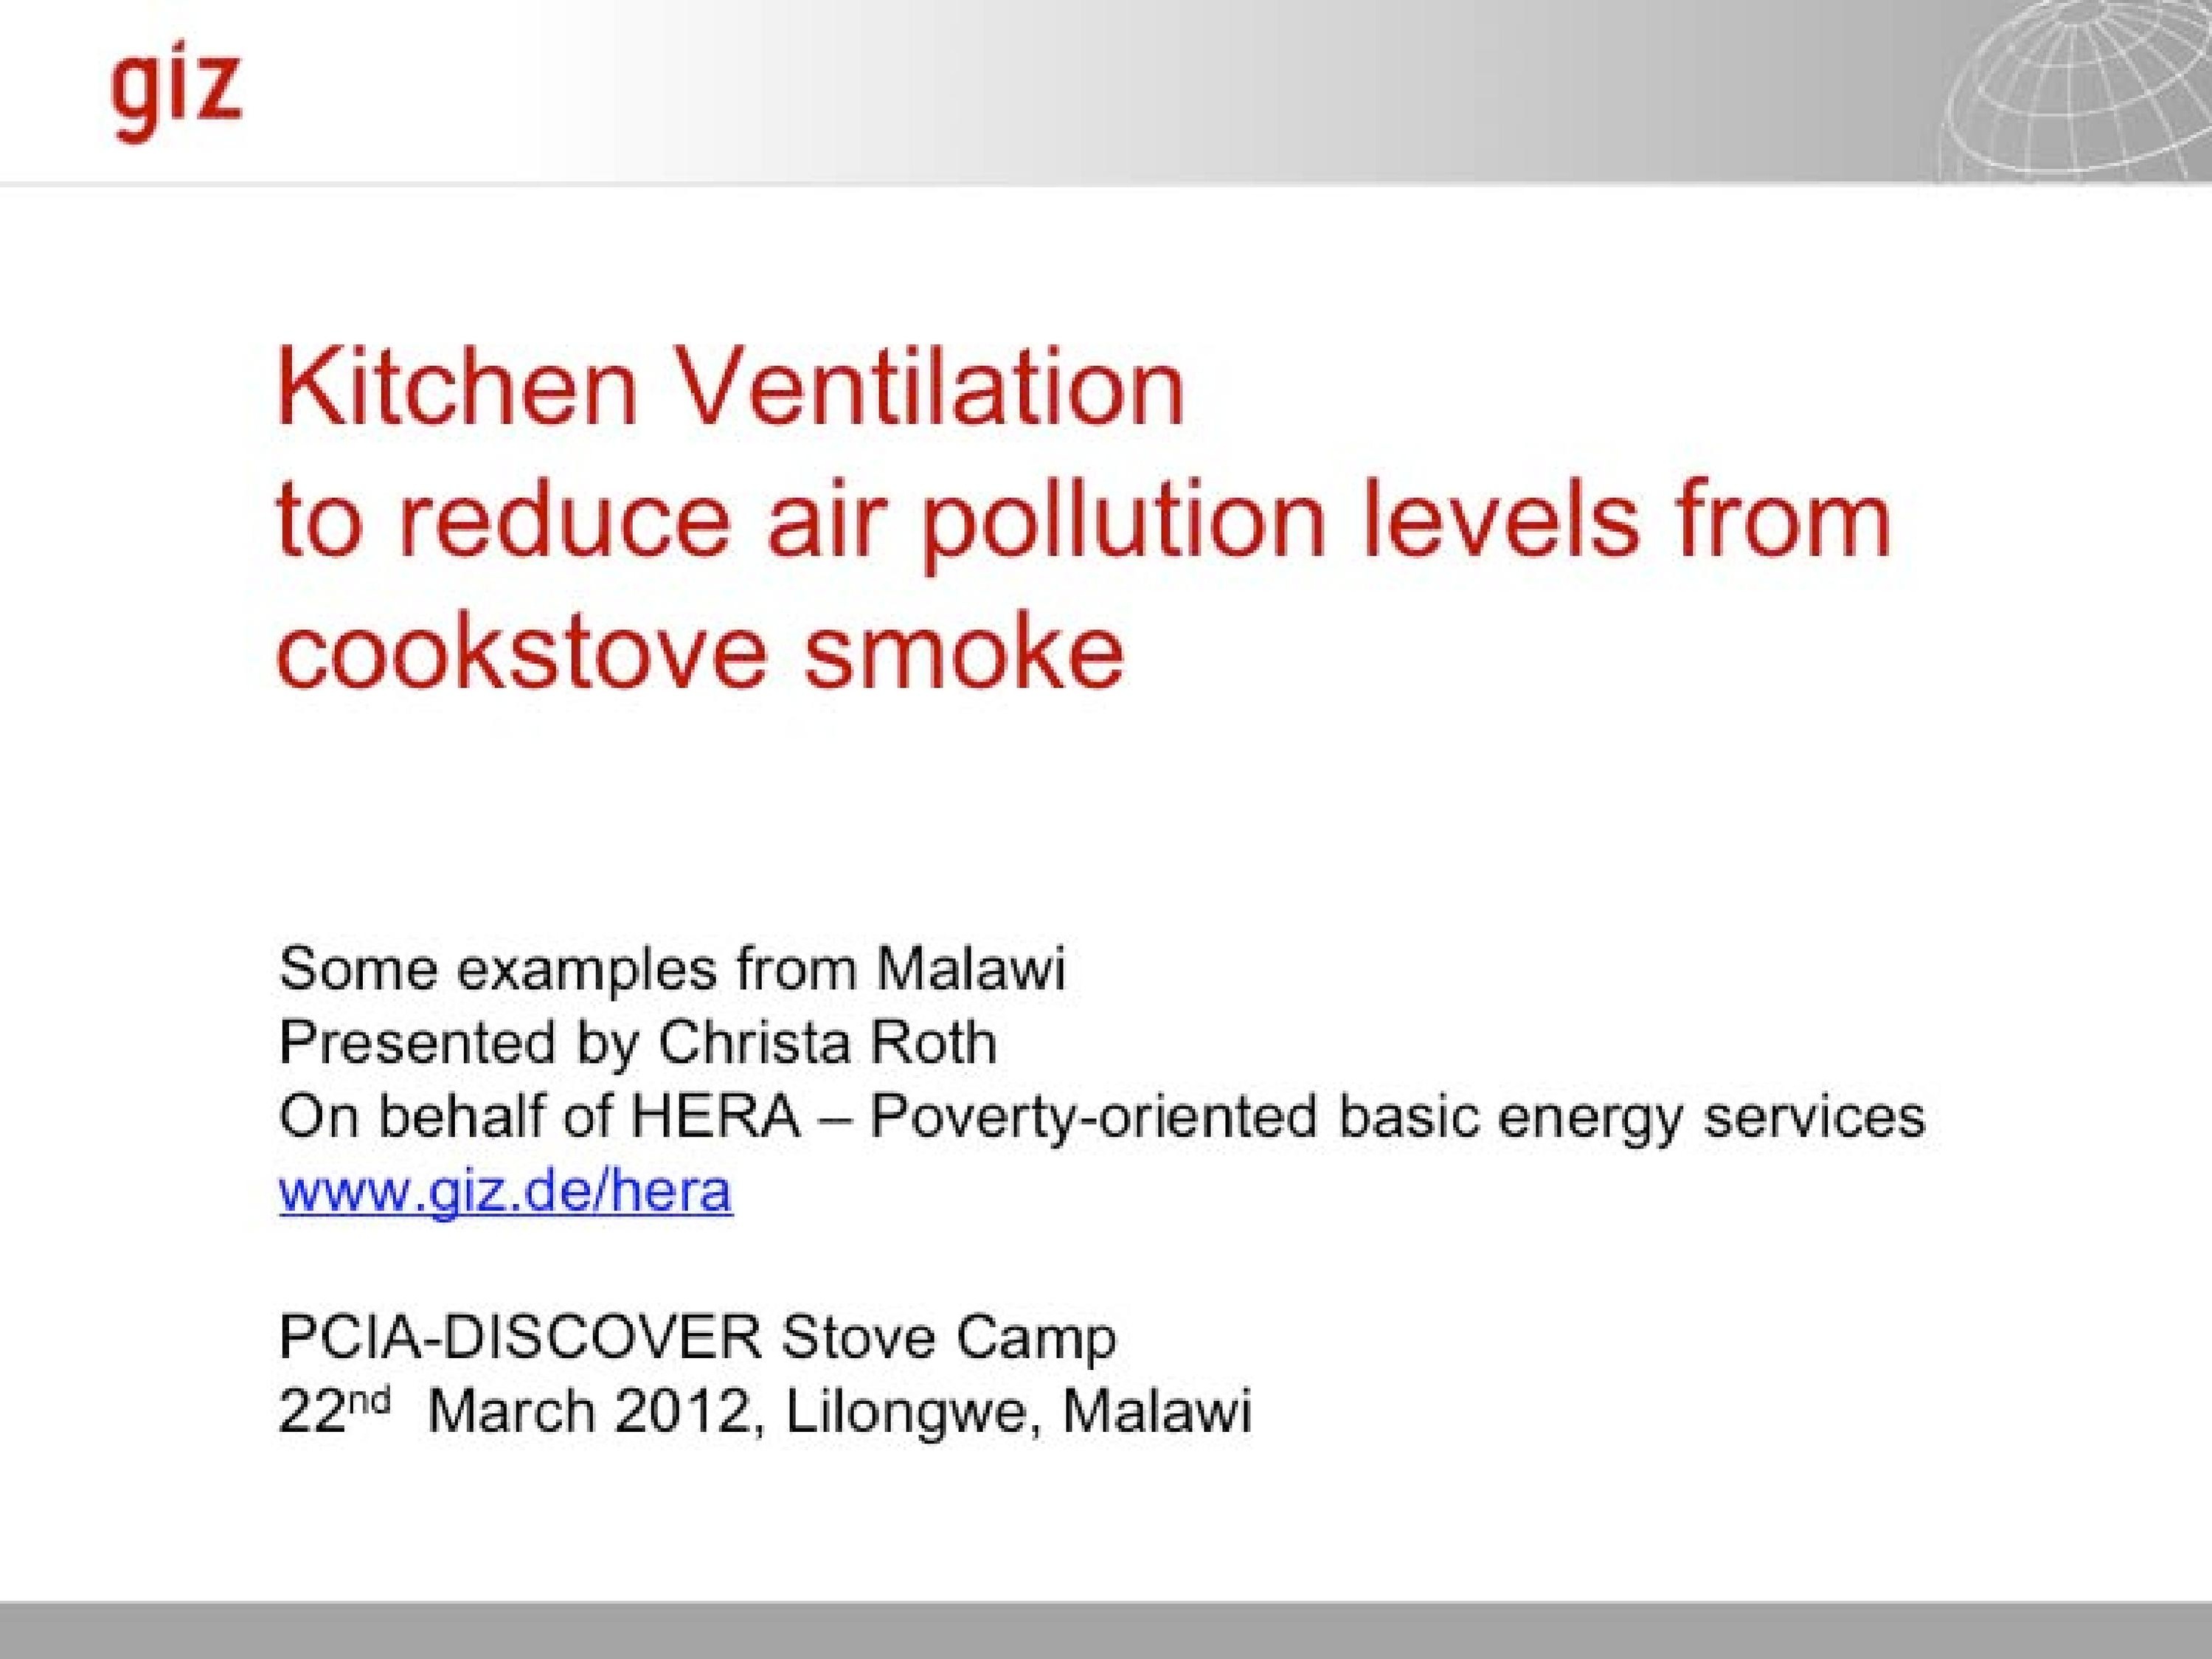 https://energypedia.info/images/9/9e/En-GIZ_2012_Roth_kitchen_ventilation-.pdf